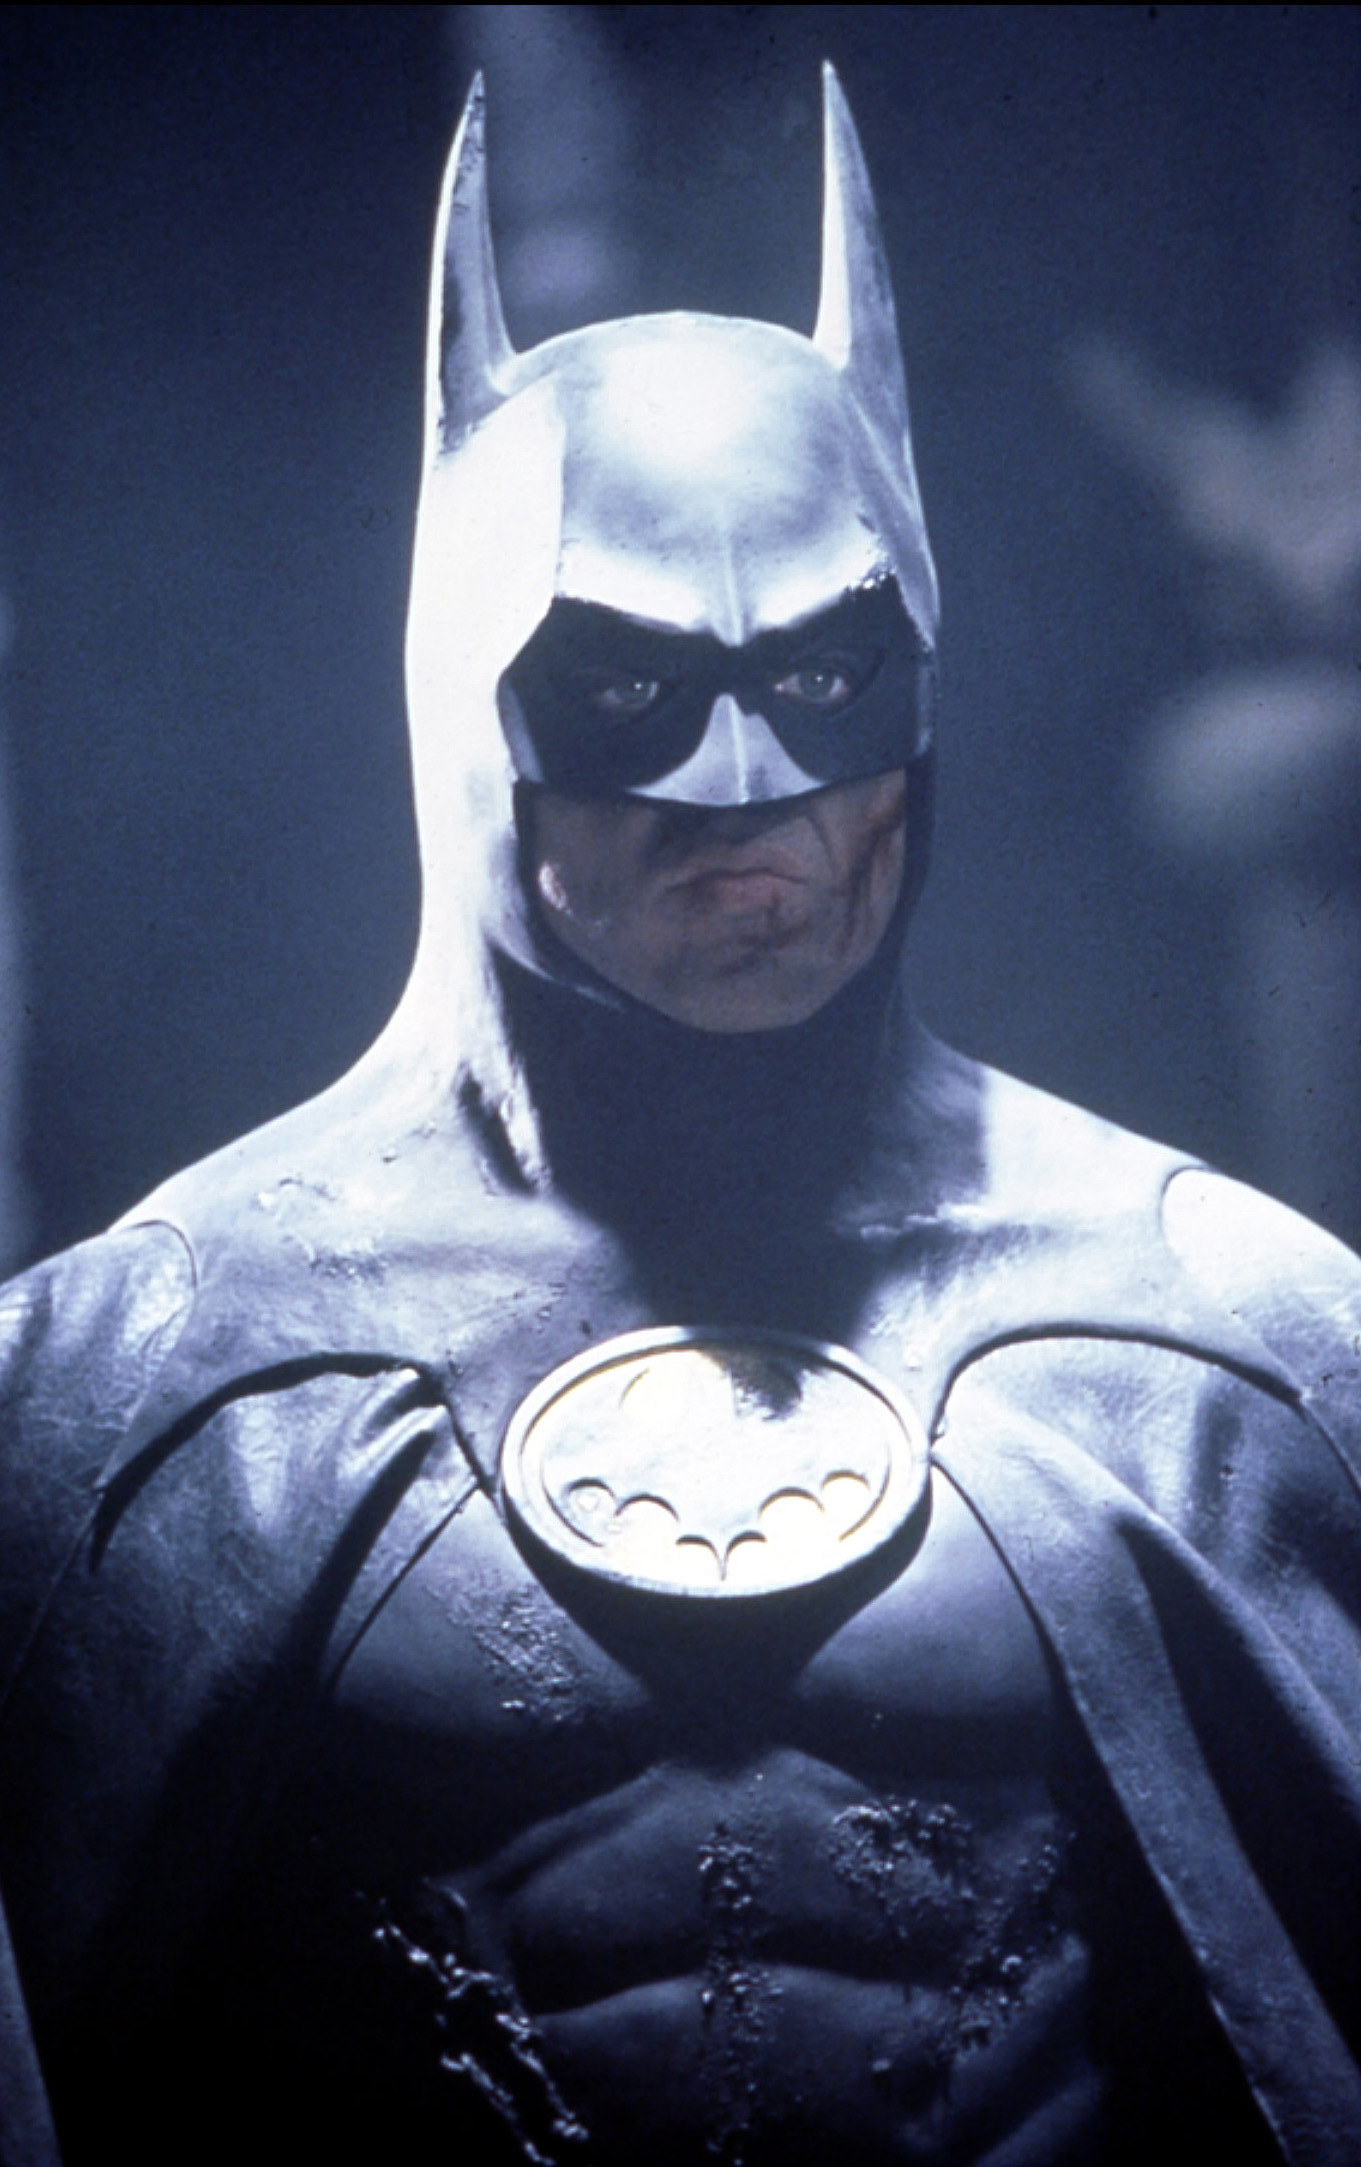 2552x1442, Wallpaper - Michael Keaton Batman 1989 , HD Wallpaper & Backgrounds